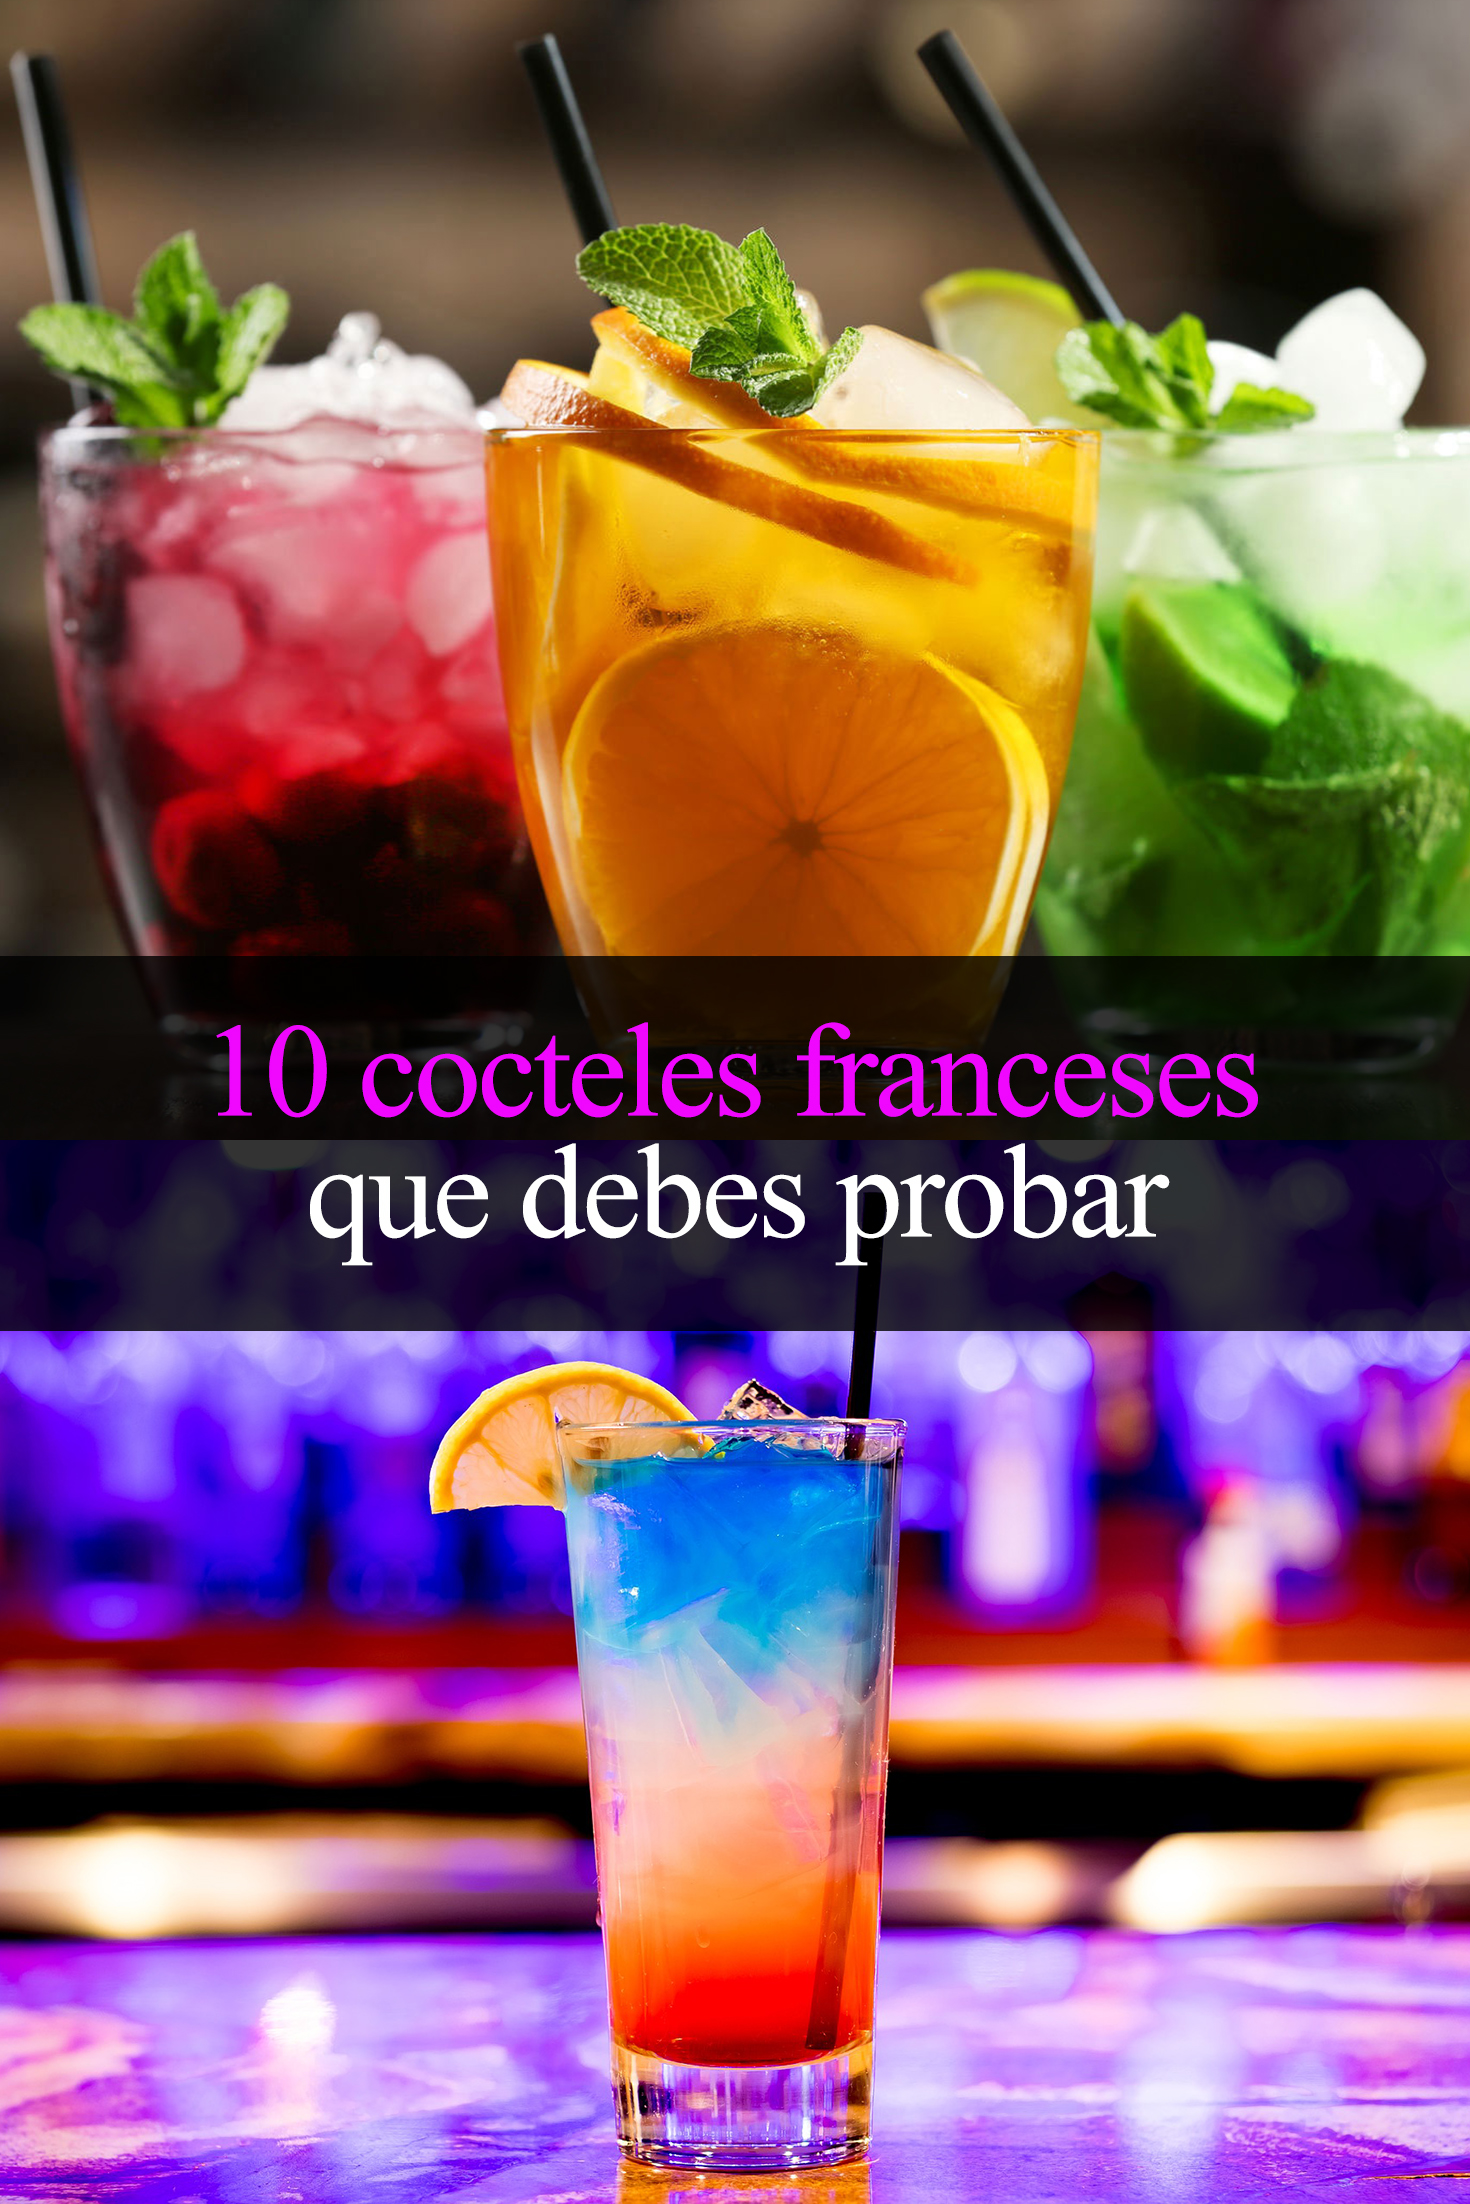 10 cocteles franceses que debes probar